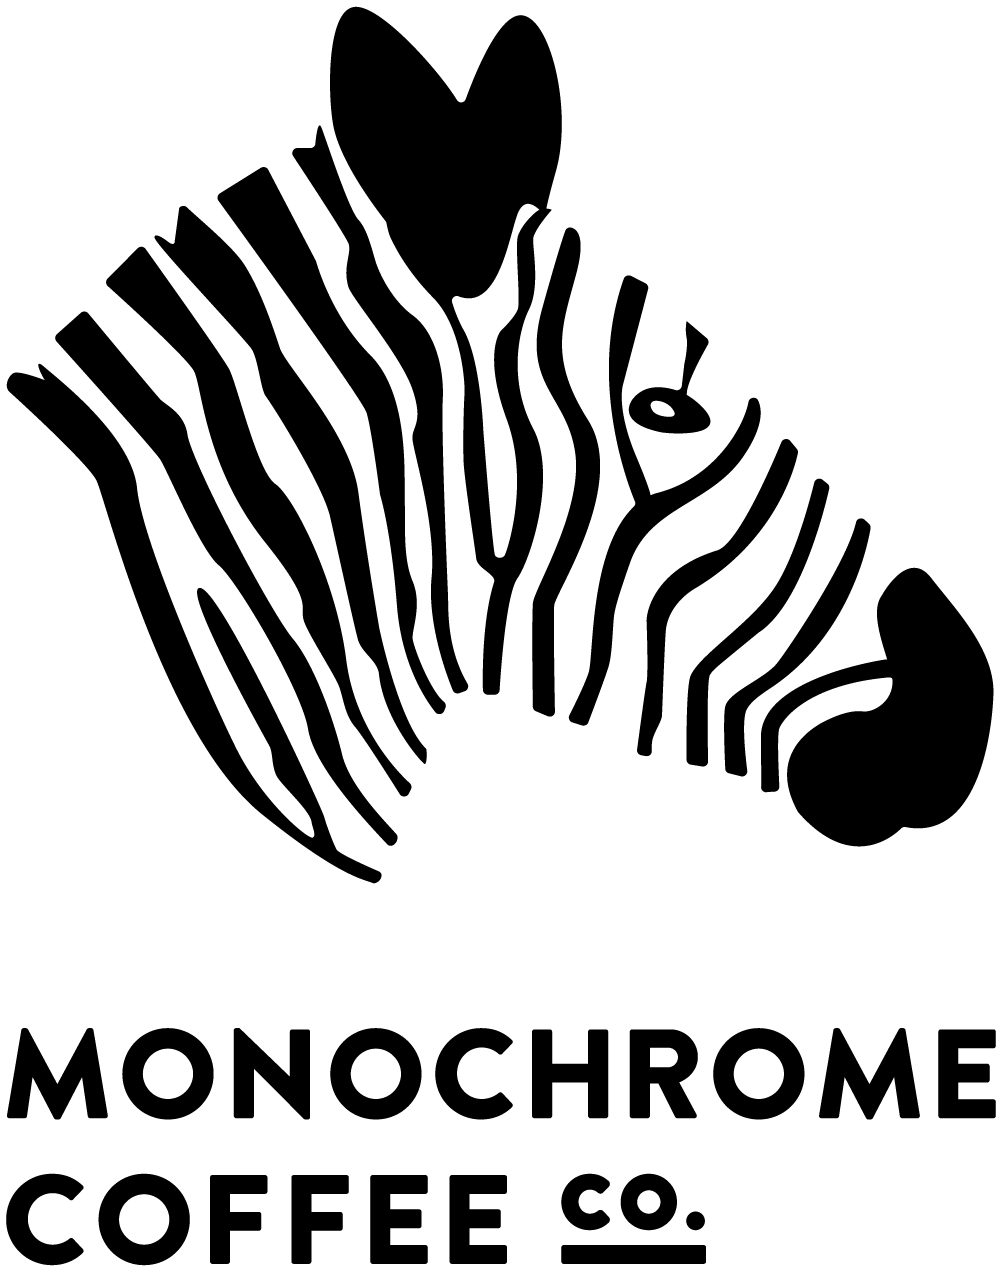 Coffee Company Logo - Monochrome Coffee Co. | A social enterprise coffee company.